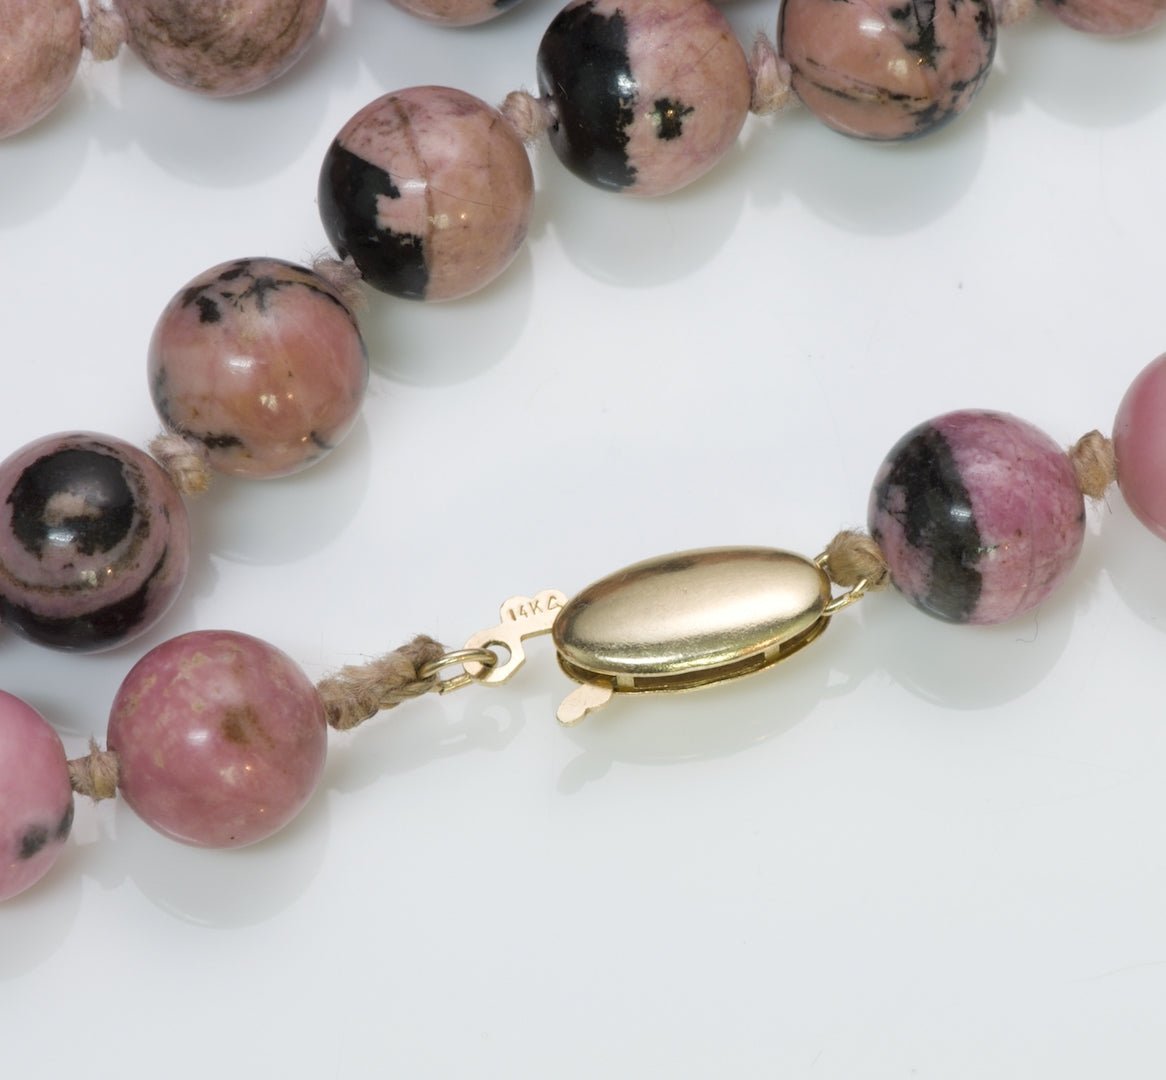 Vintage Agate Bead Necklace